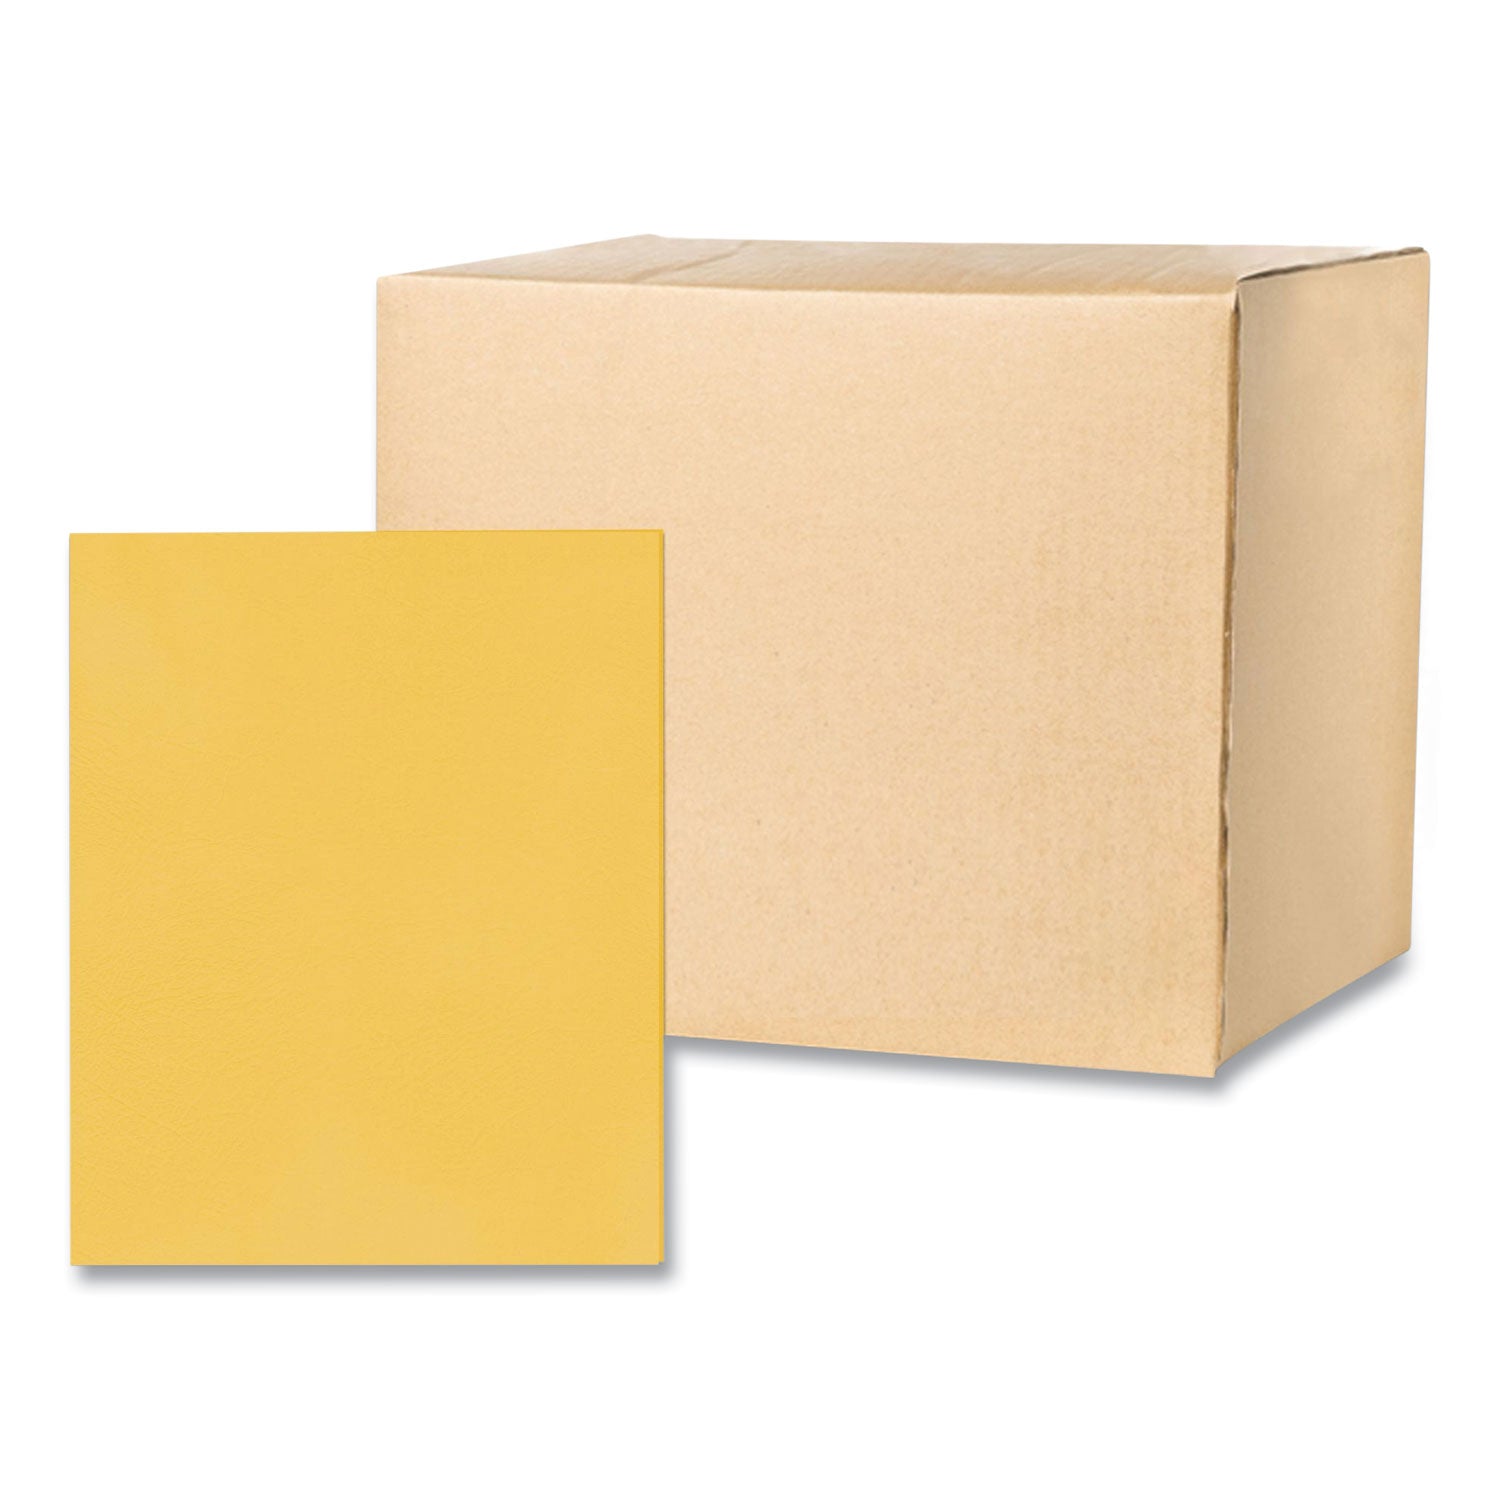 pocket-folder-05-capacity-11-x-85-gold-25-box-10-boxes-carton-ships-in-4-6-business-days_roa50121cs - 1